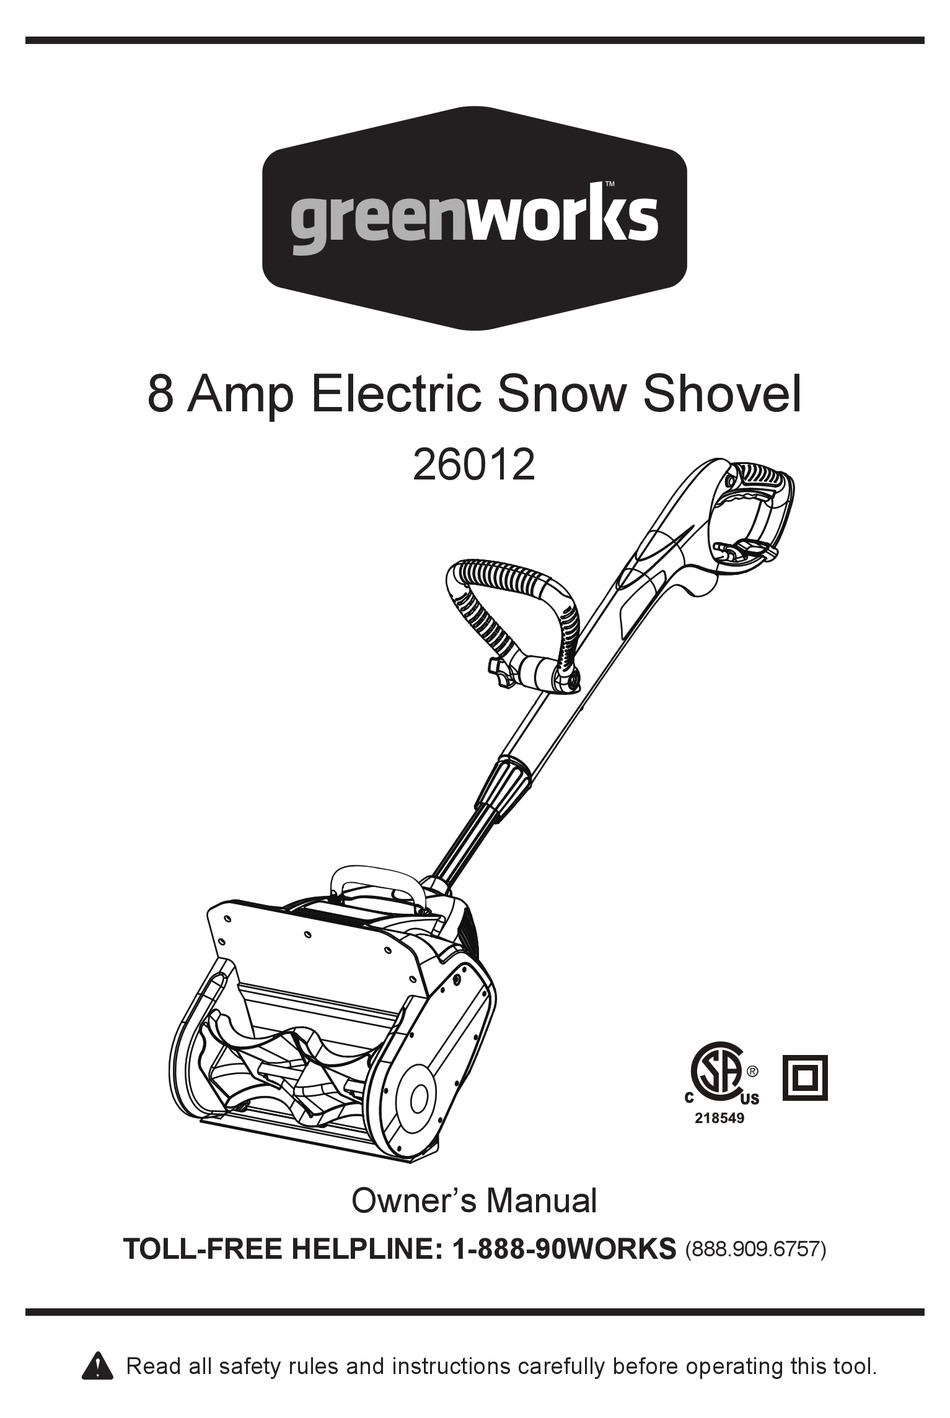 Greenworks electric snow shovel manual